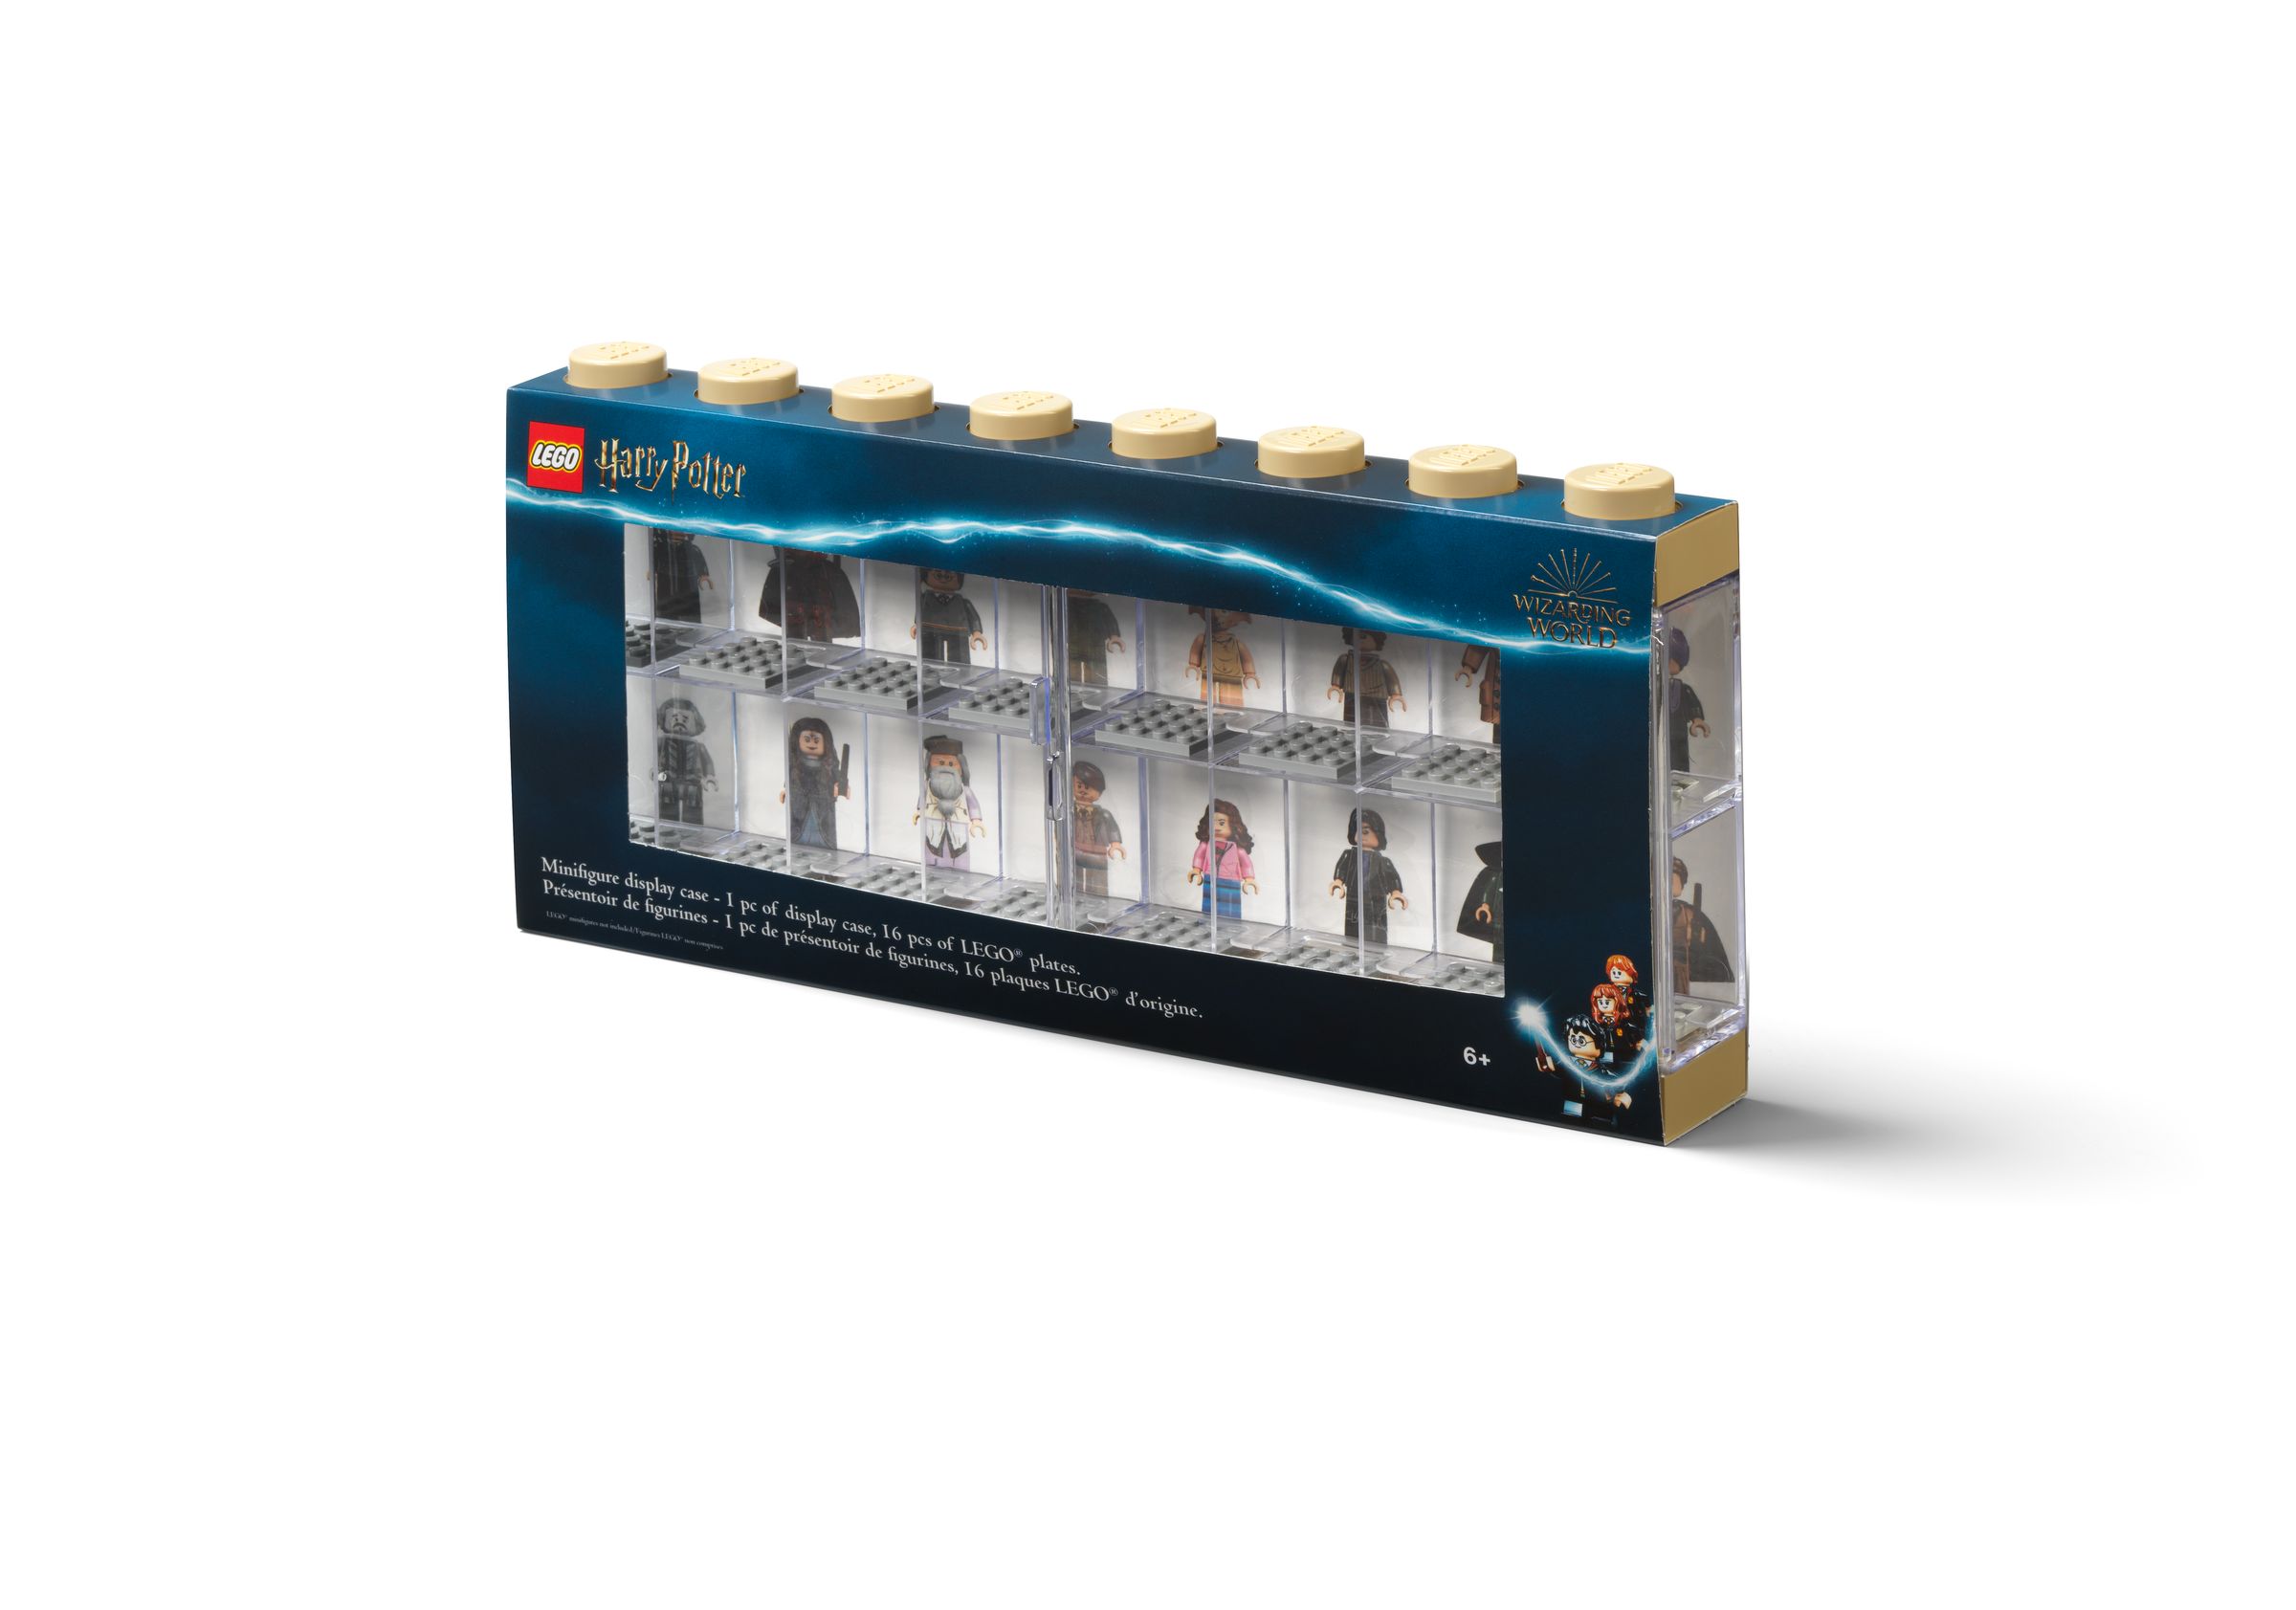 LEGO Gear 5007883 Schaukasten für 16 Harry Potter™ Minifiguren LEGO_5007883_alt1.jpg